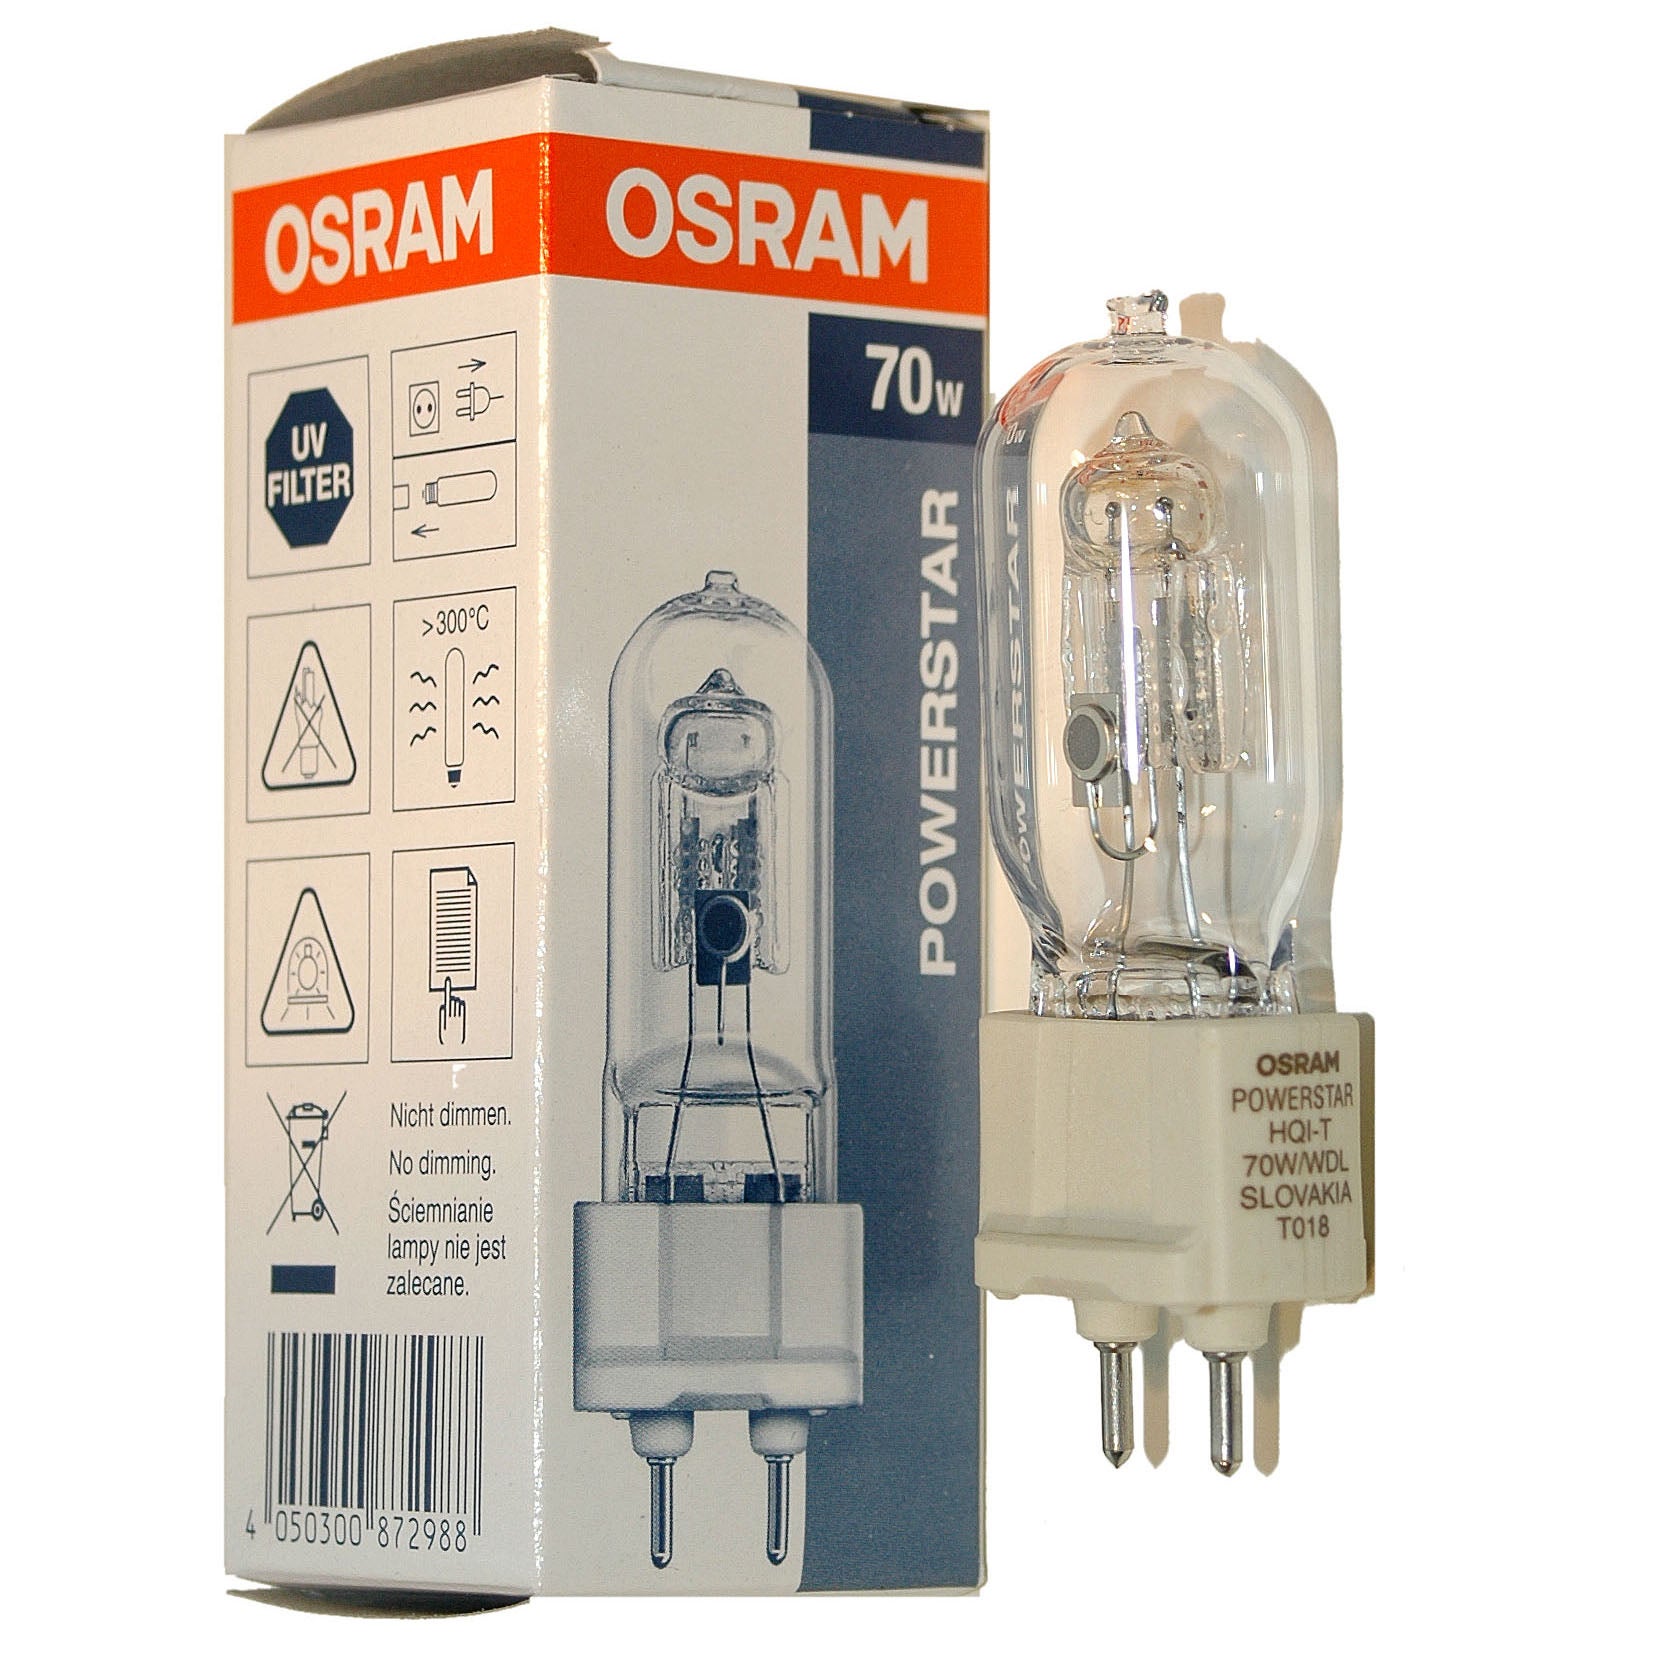 OSRAM Powerstar HQI-T 70w/wdl g12 de Luxe Blanc chaud